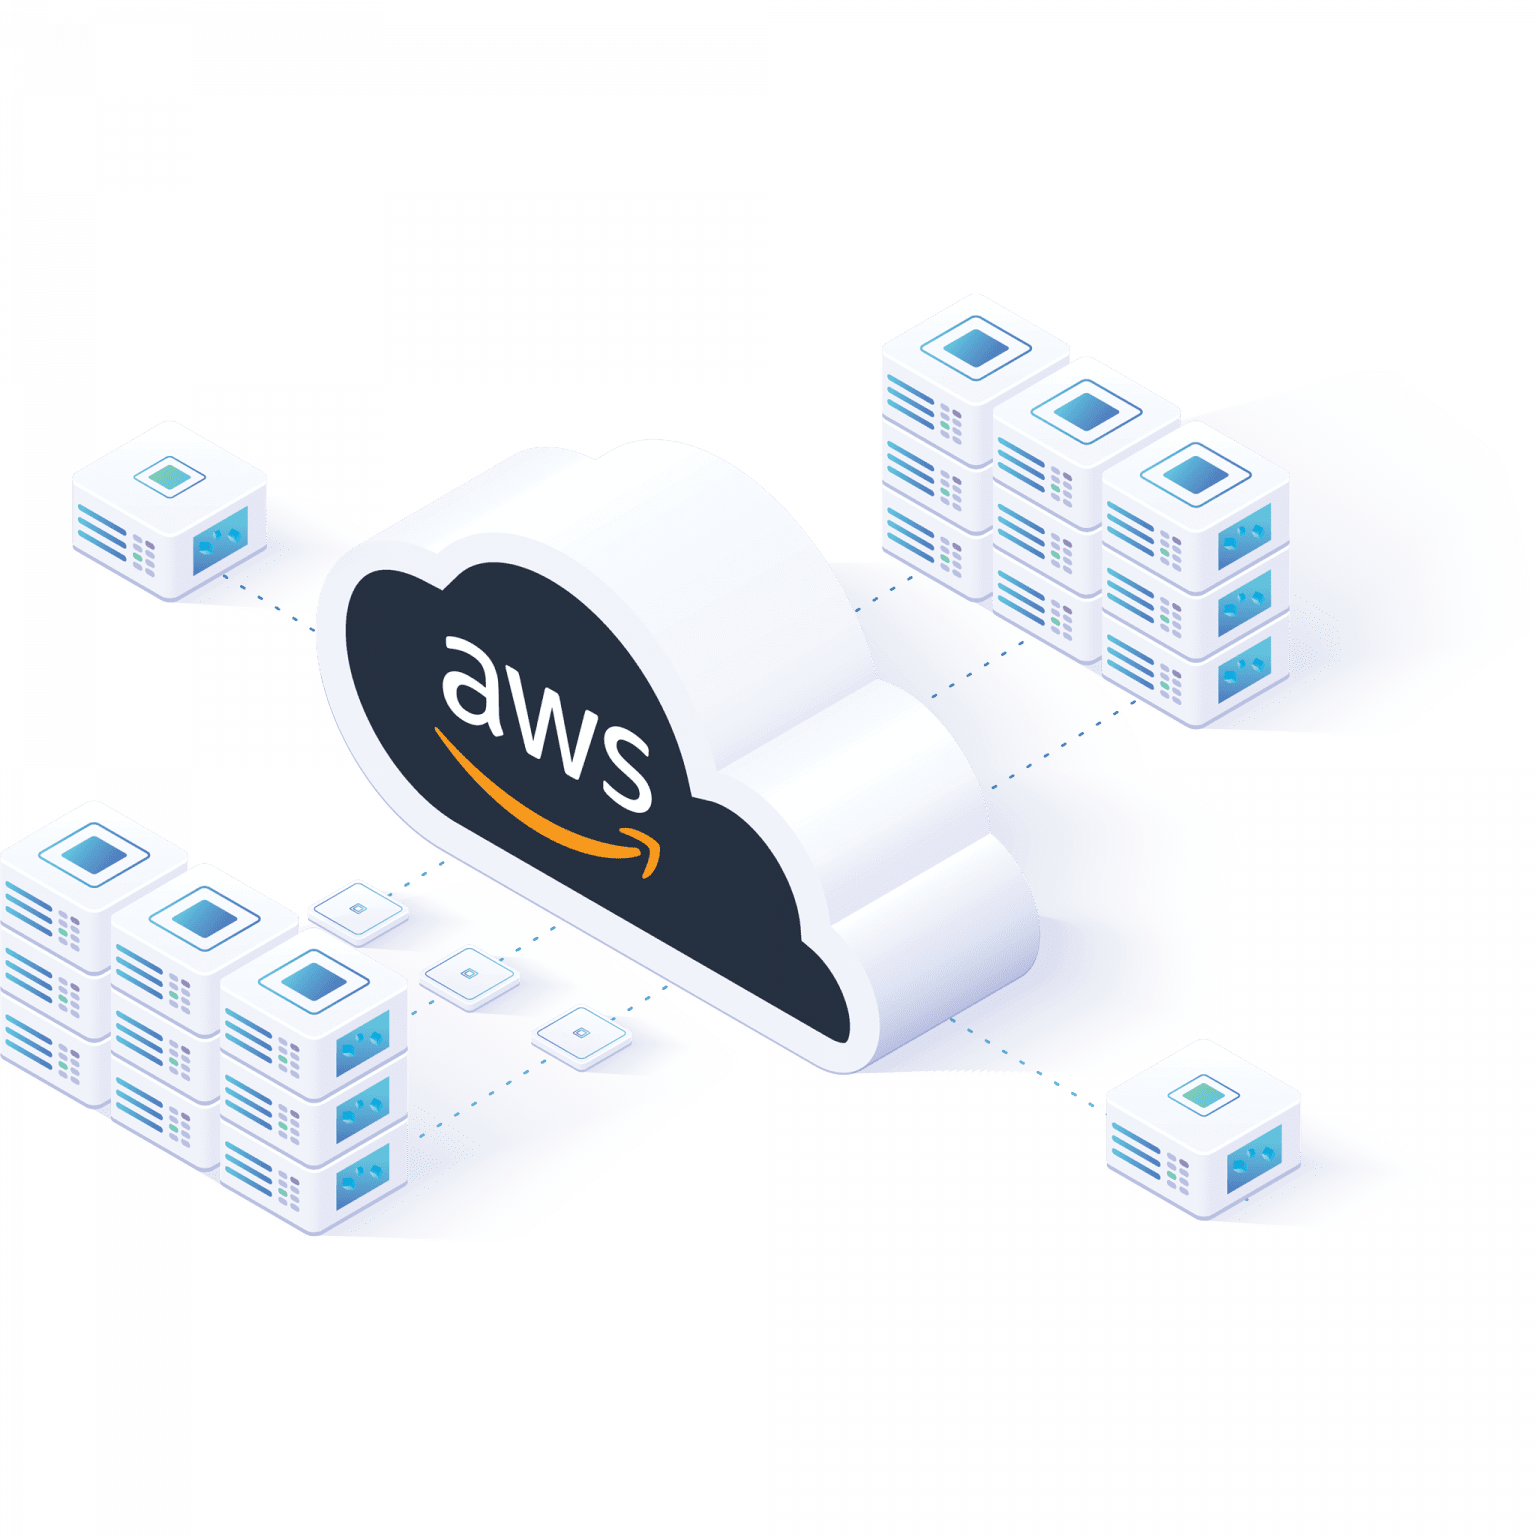 Chicago AWS Cloud Development